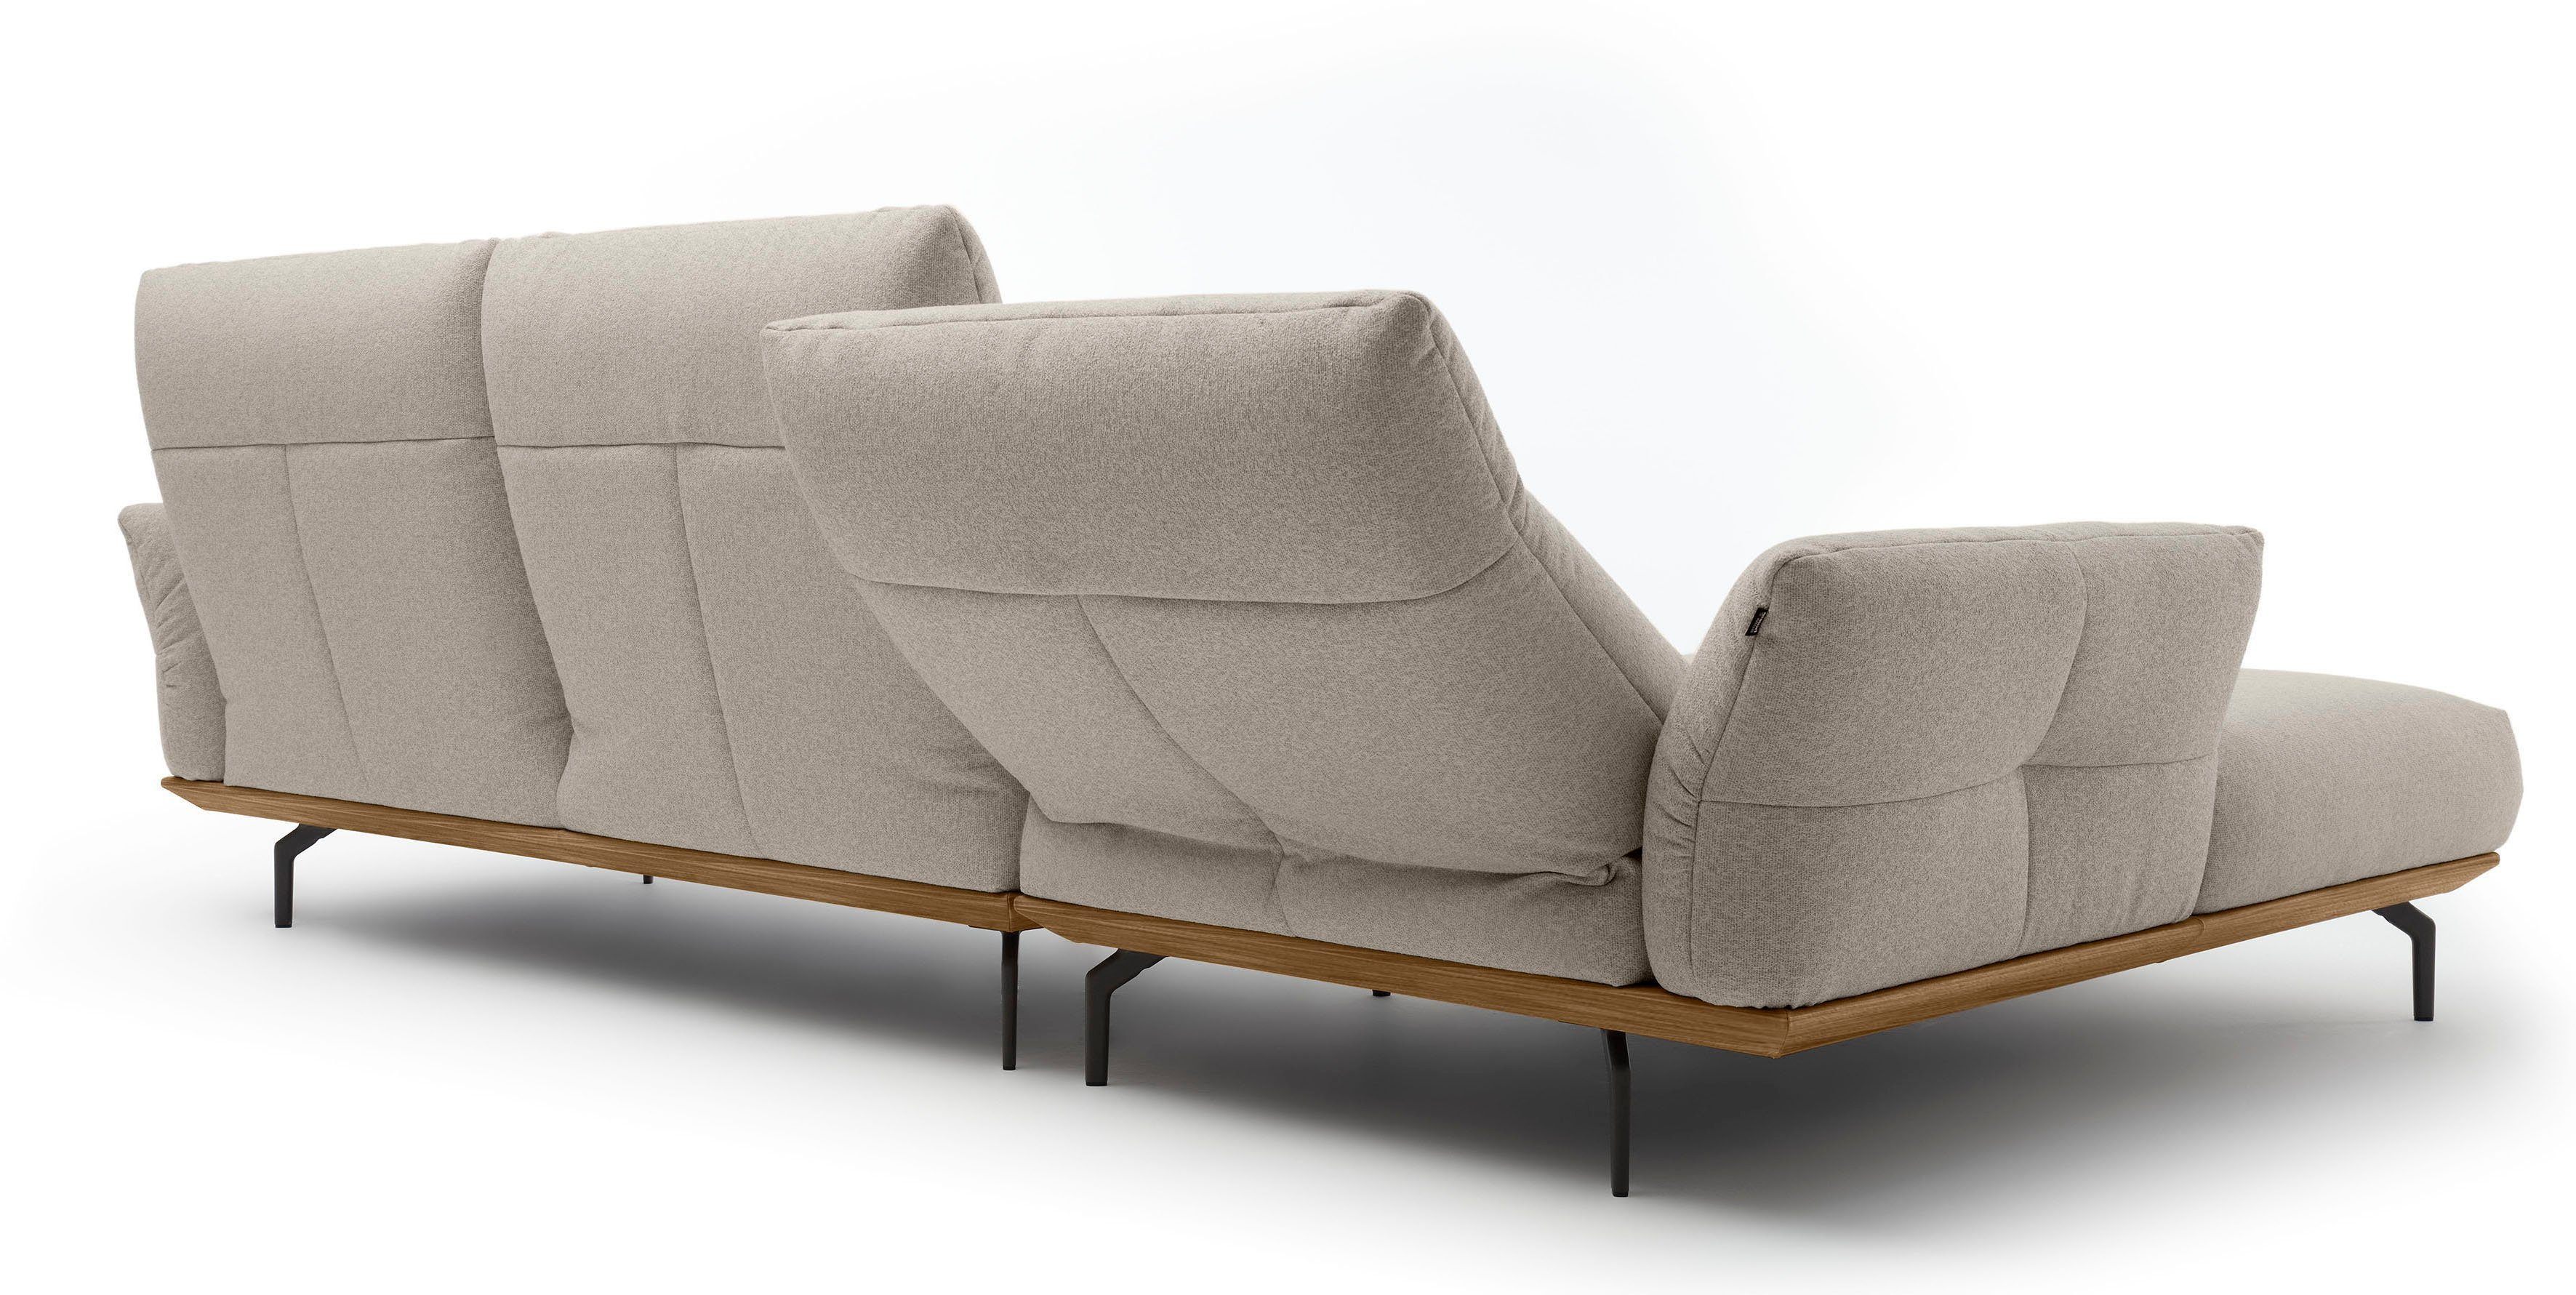 hülsta sofa in Breite Sockel cm hs.460, 318 Winkelfüße Ecksofa Nussbaum, in Umbragrau